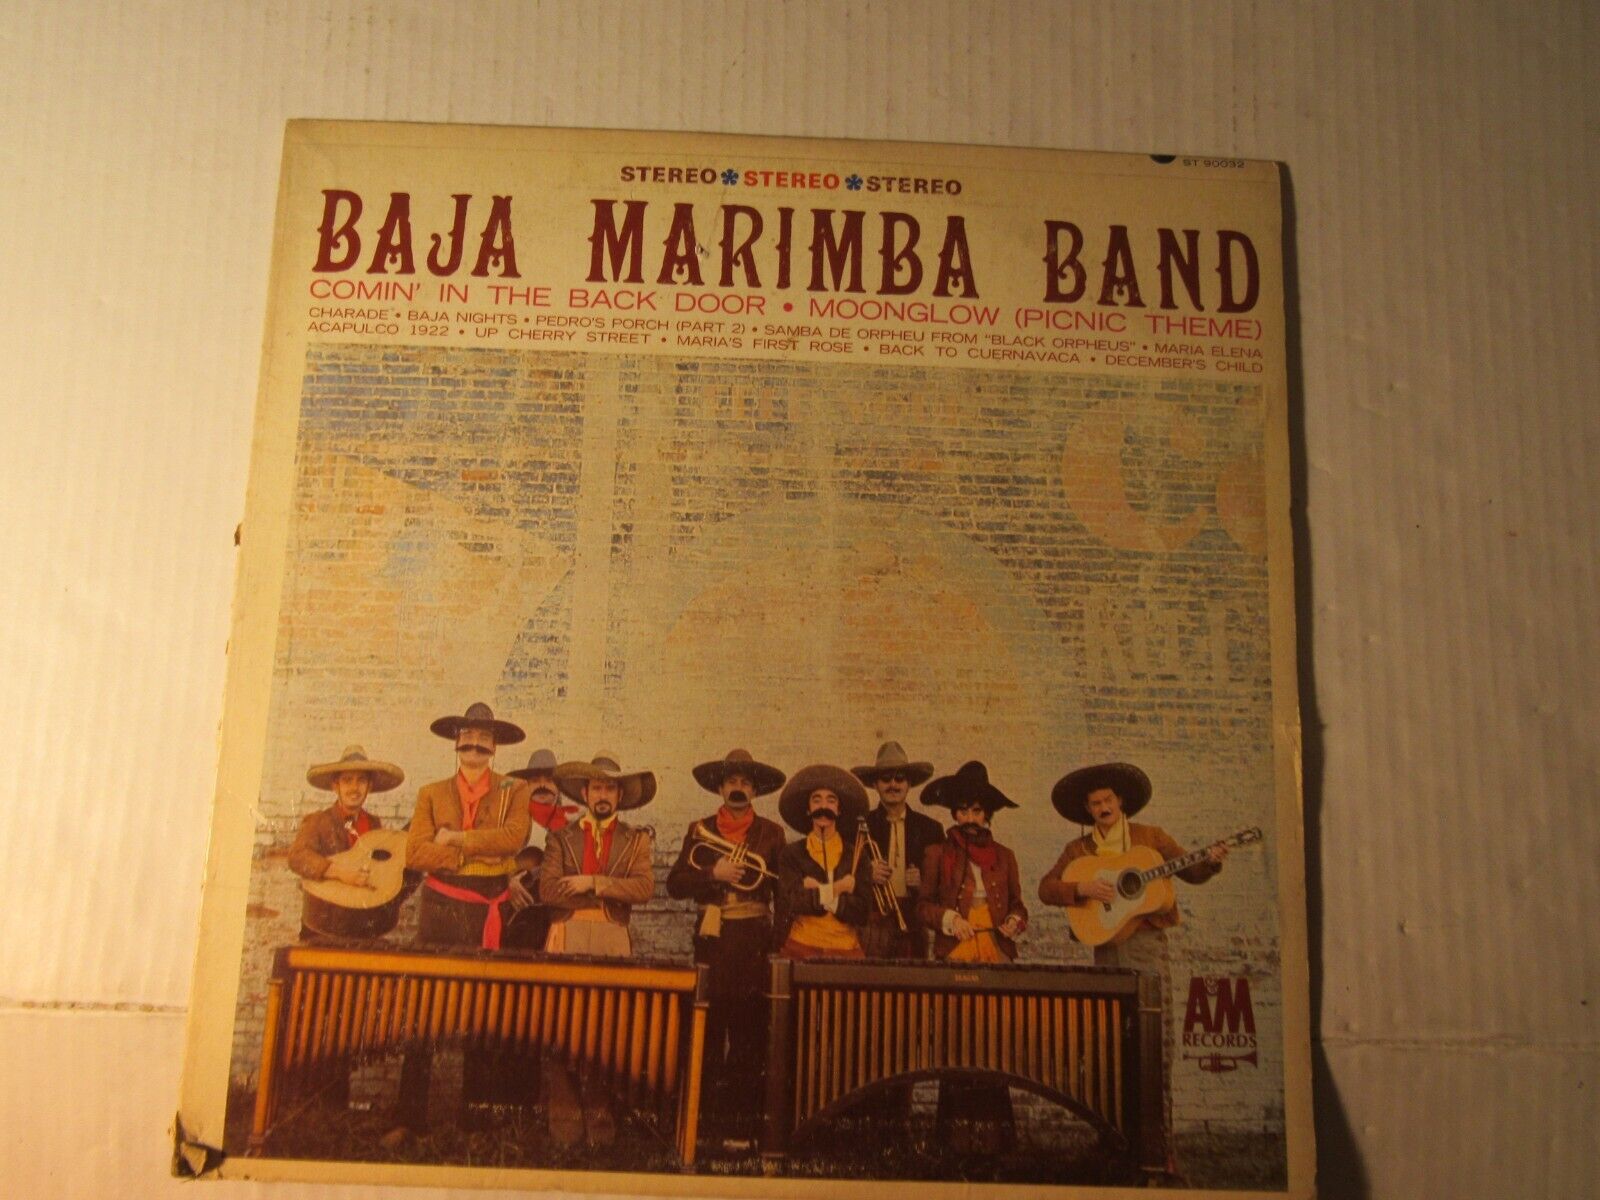 Baja Mirimba Band "Self-Titled" A&M ST-90032, Vinyl LP, Stereo, 1964, G+